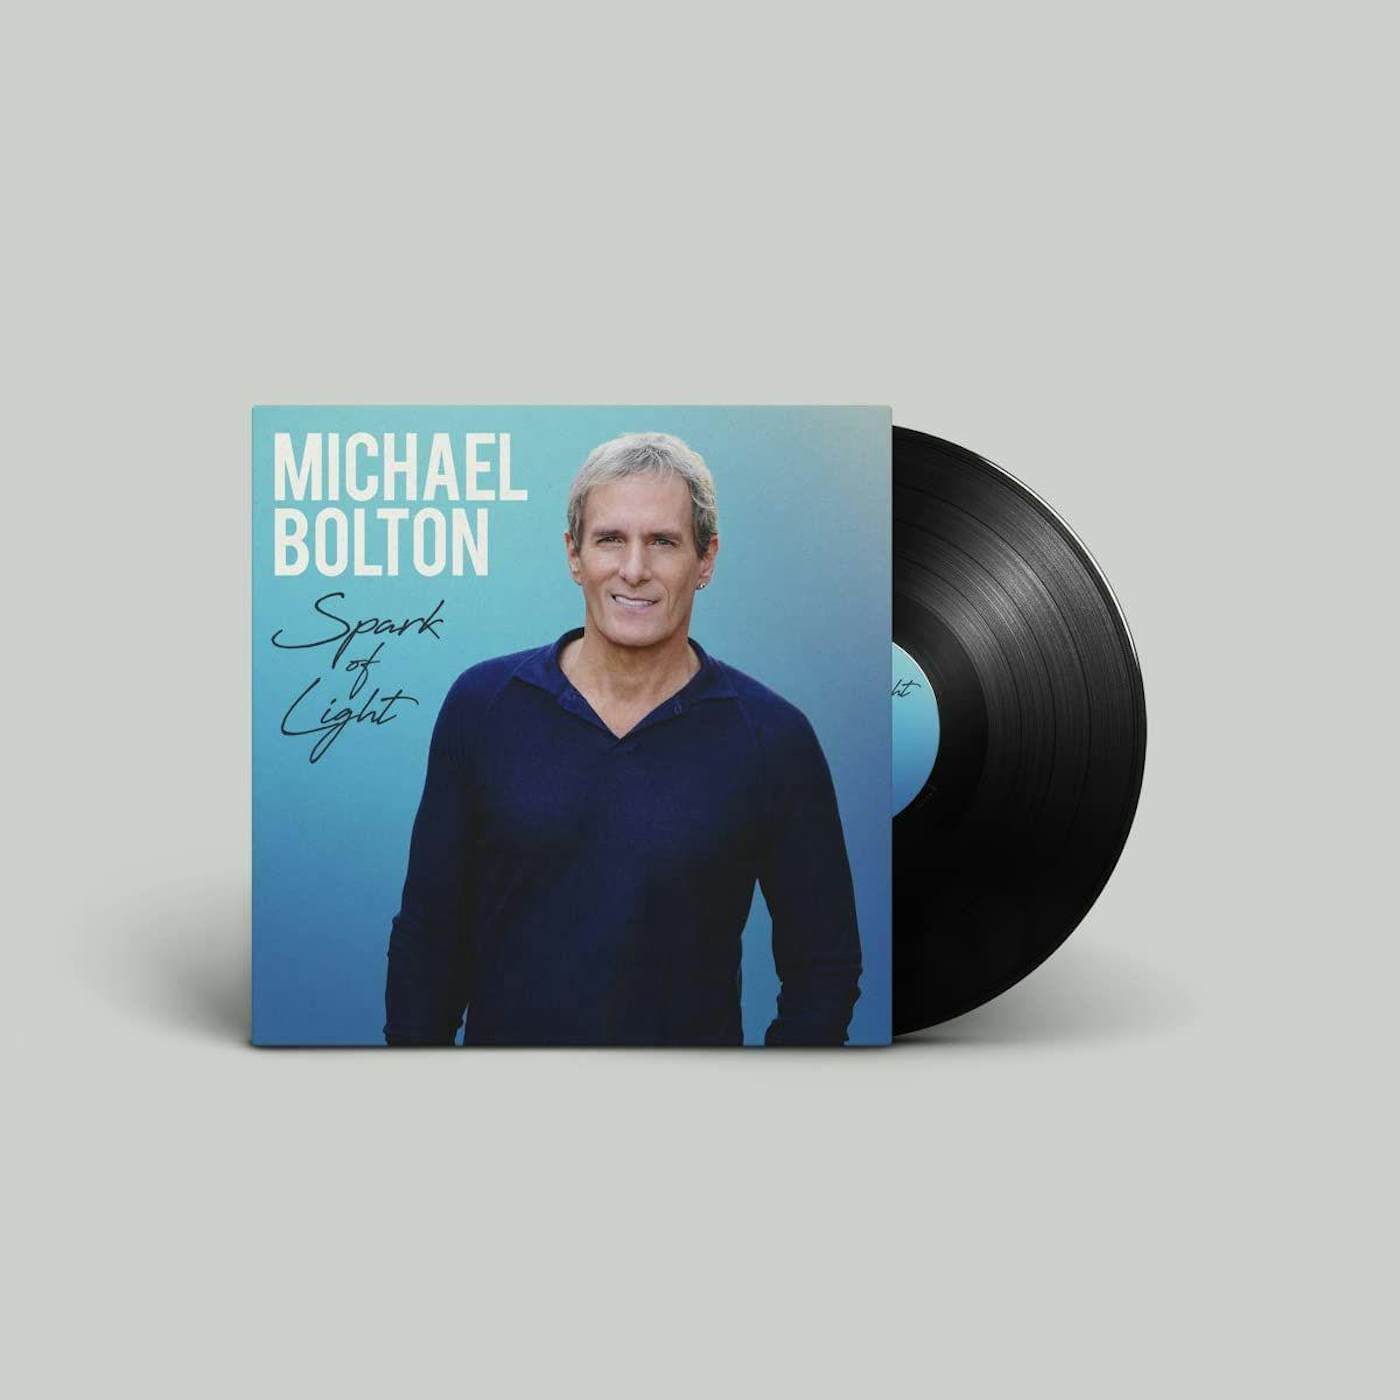 Michael Bolton SPARK OF LIGHT Vinyl Record